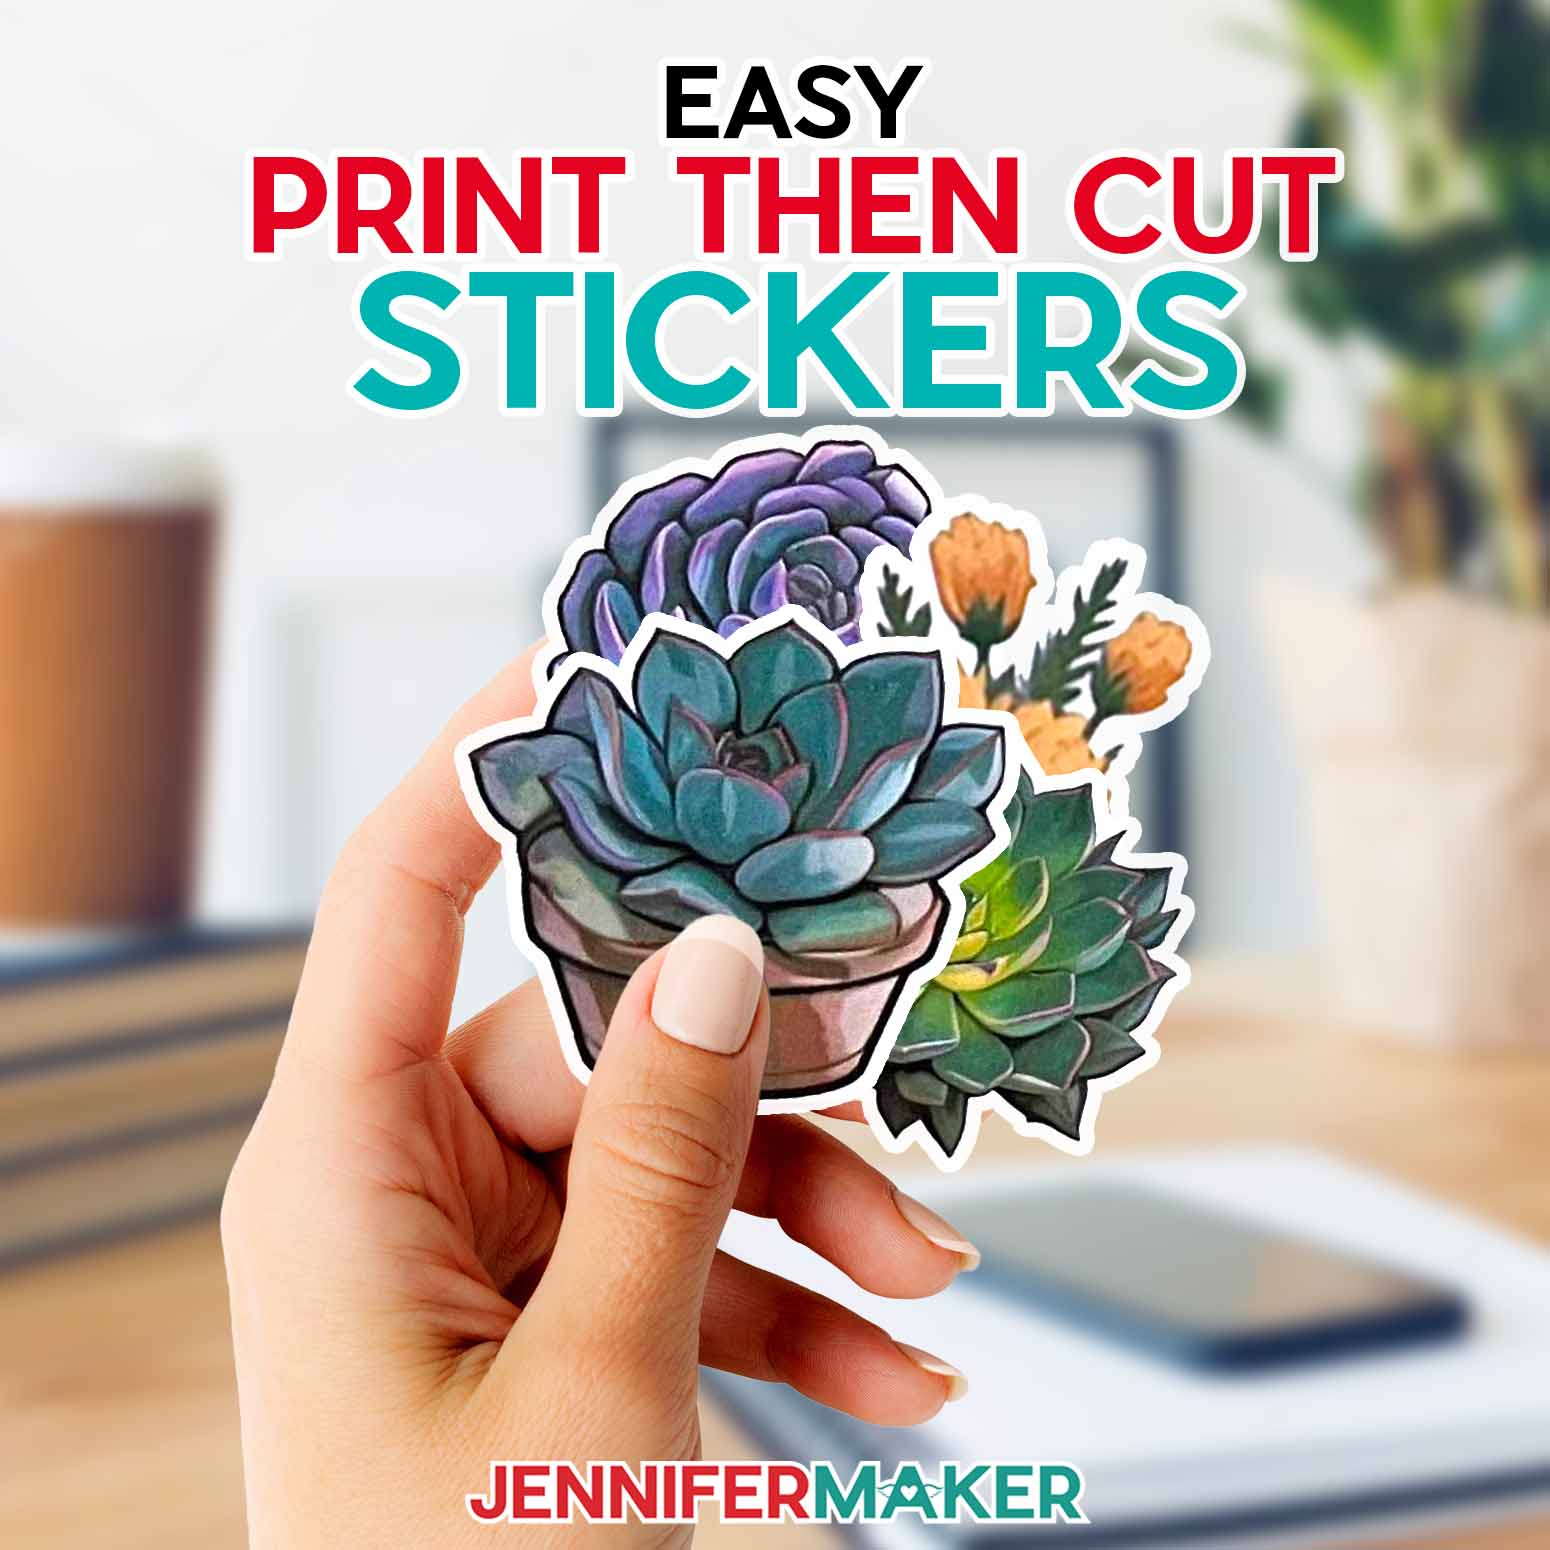 jennifer maker print and cut